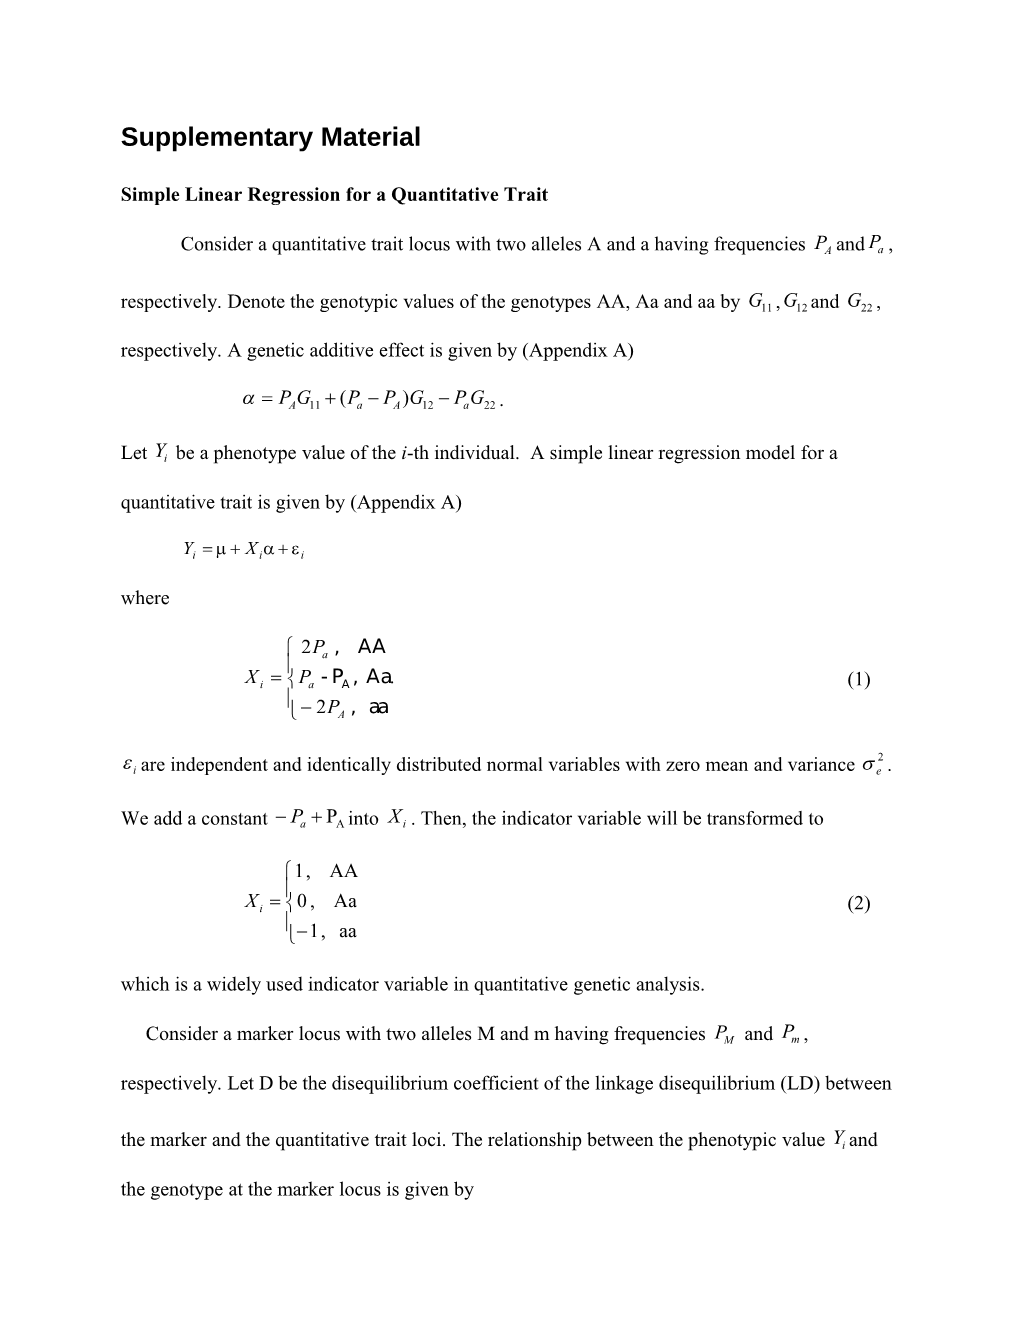 Simple Linear Regression for a Quantitative Trait